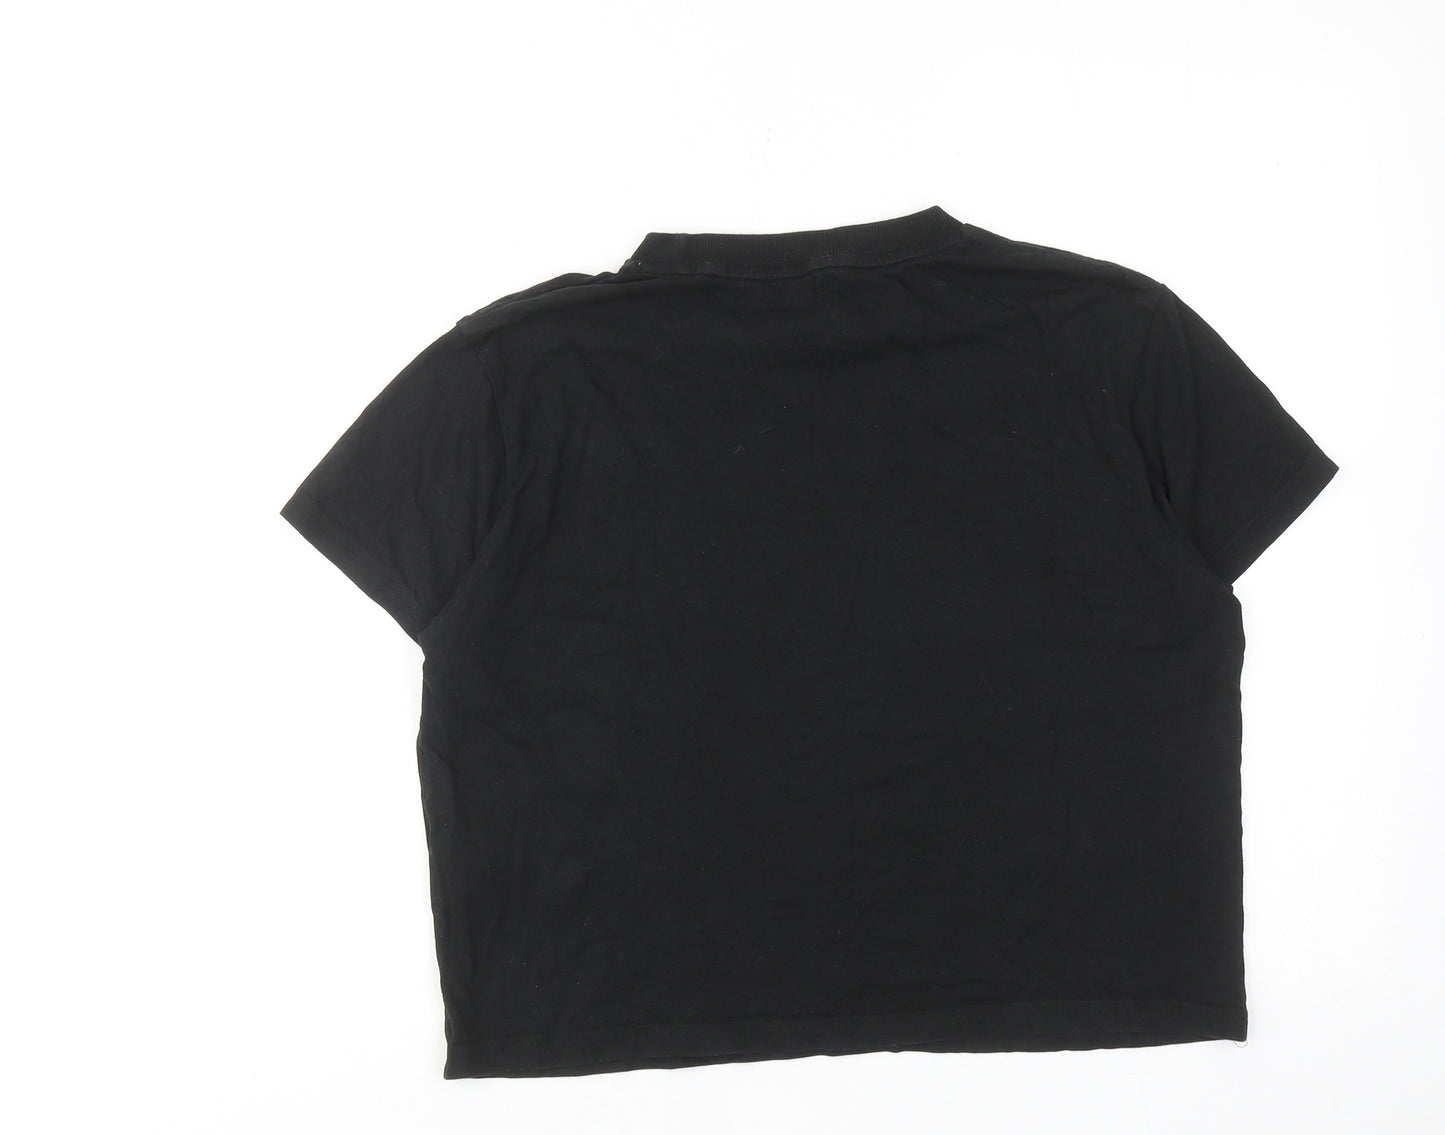 PUMA Womens Black Cotton Basic T-Shirt Size S Round Neck